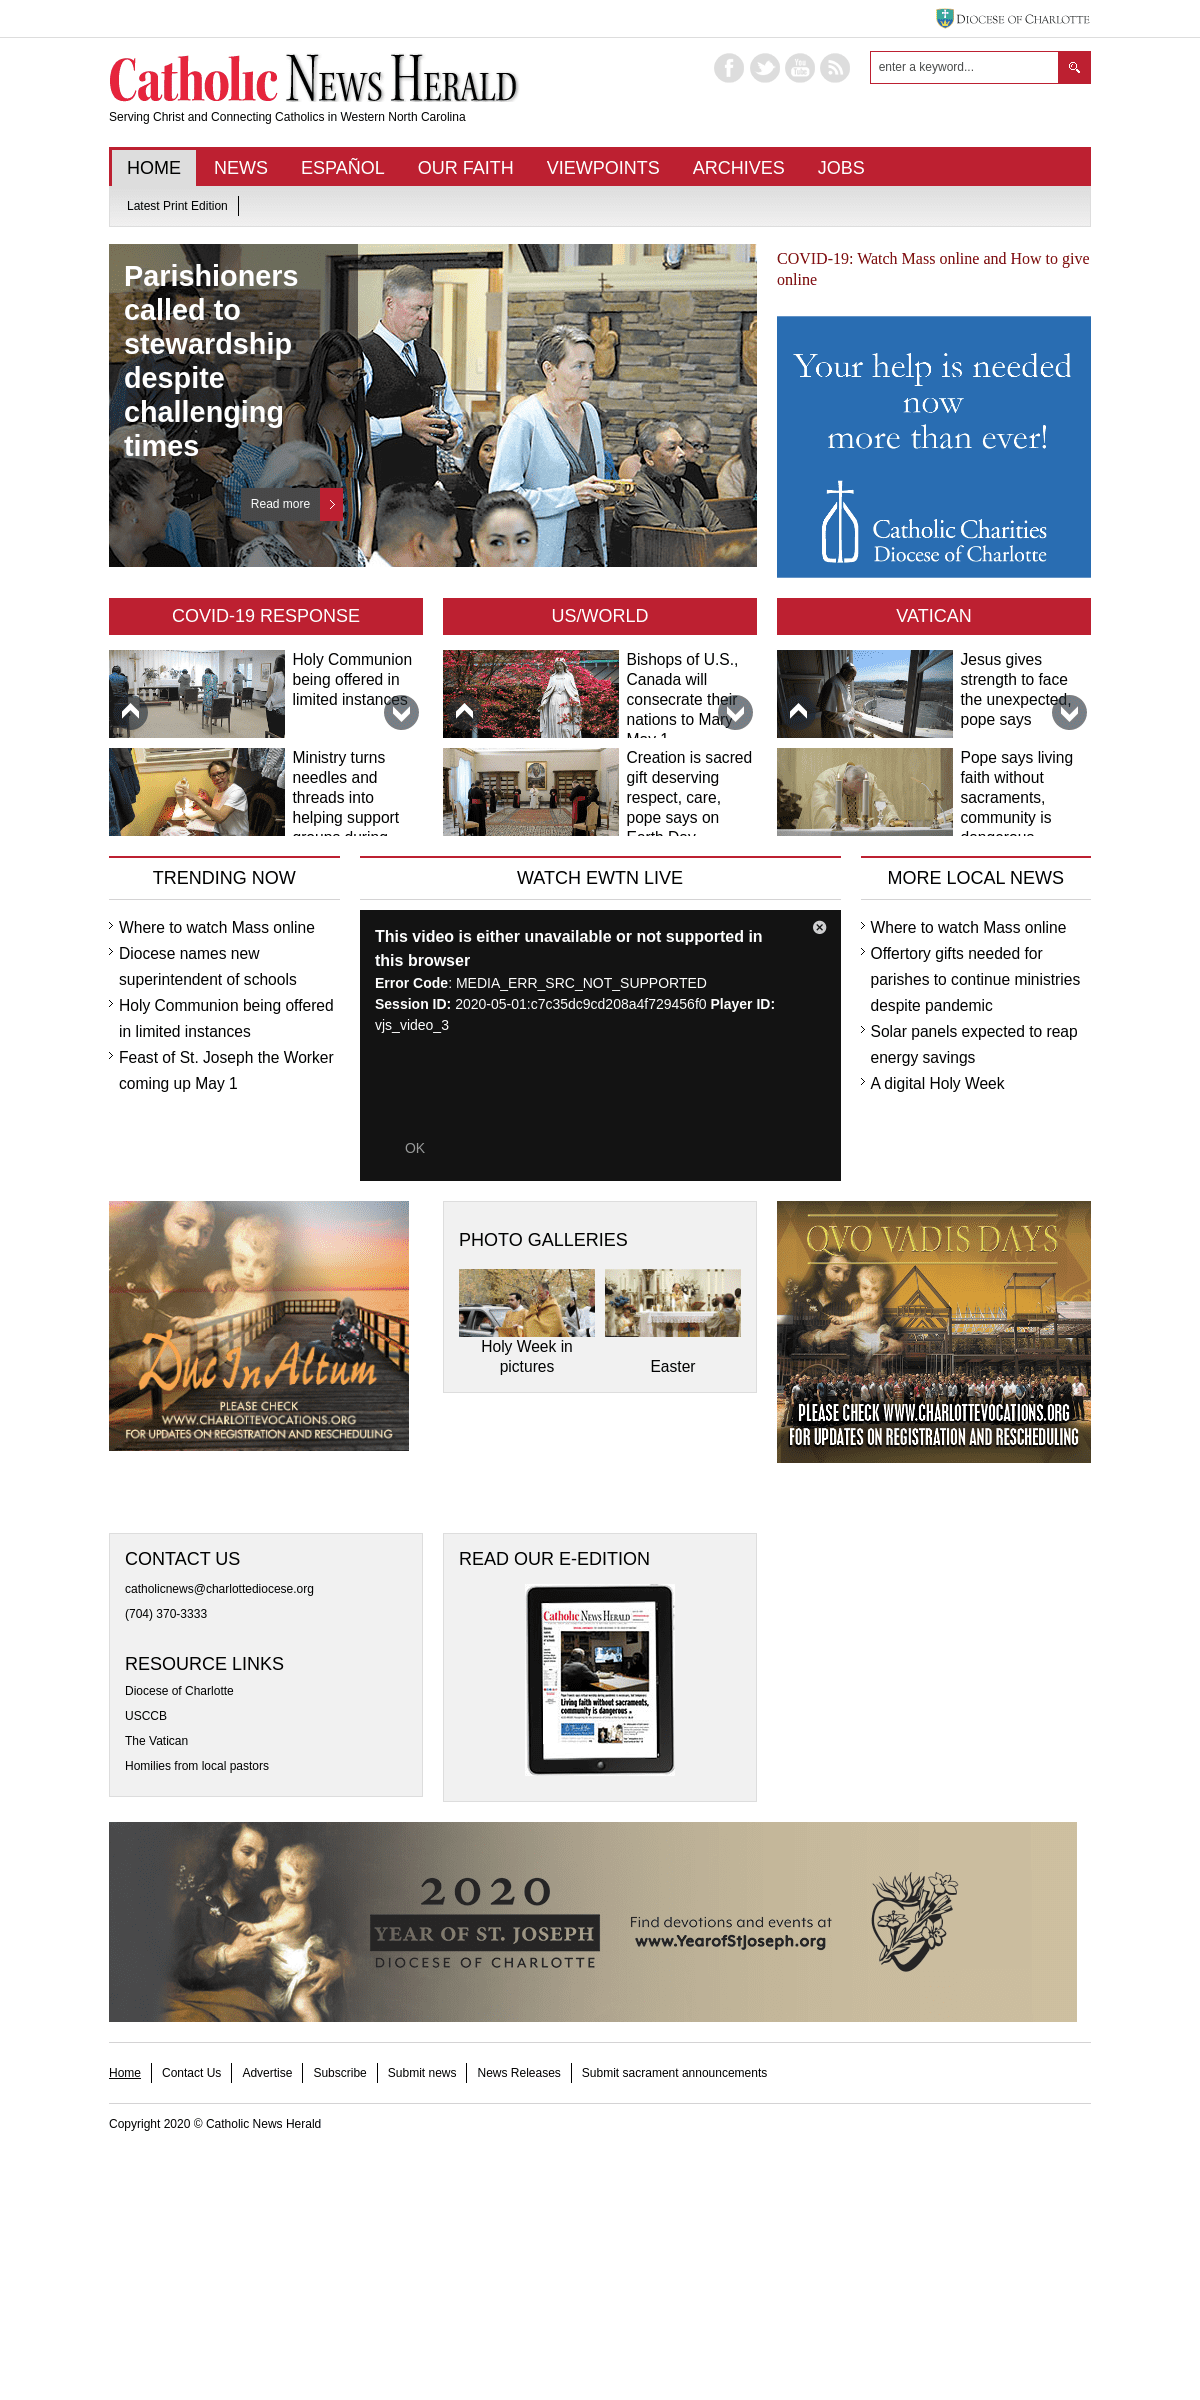 A complete backup of catholicnewsherald.com